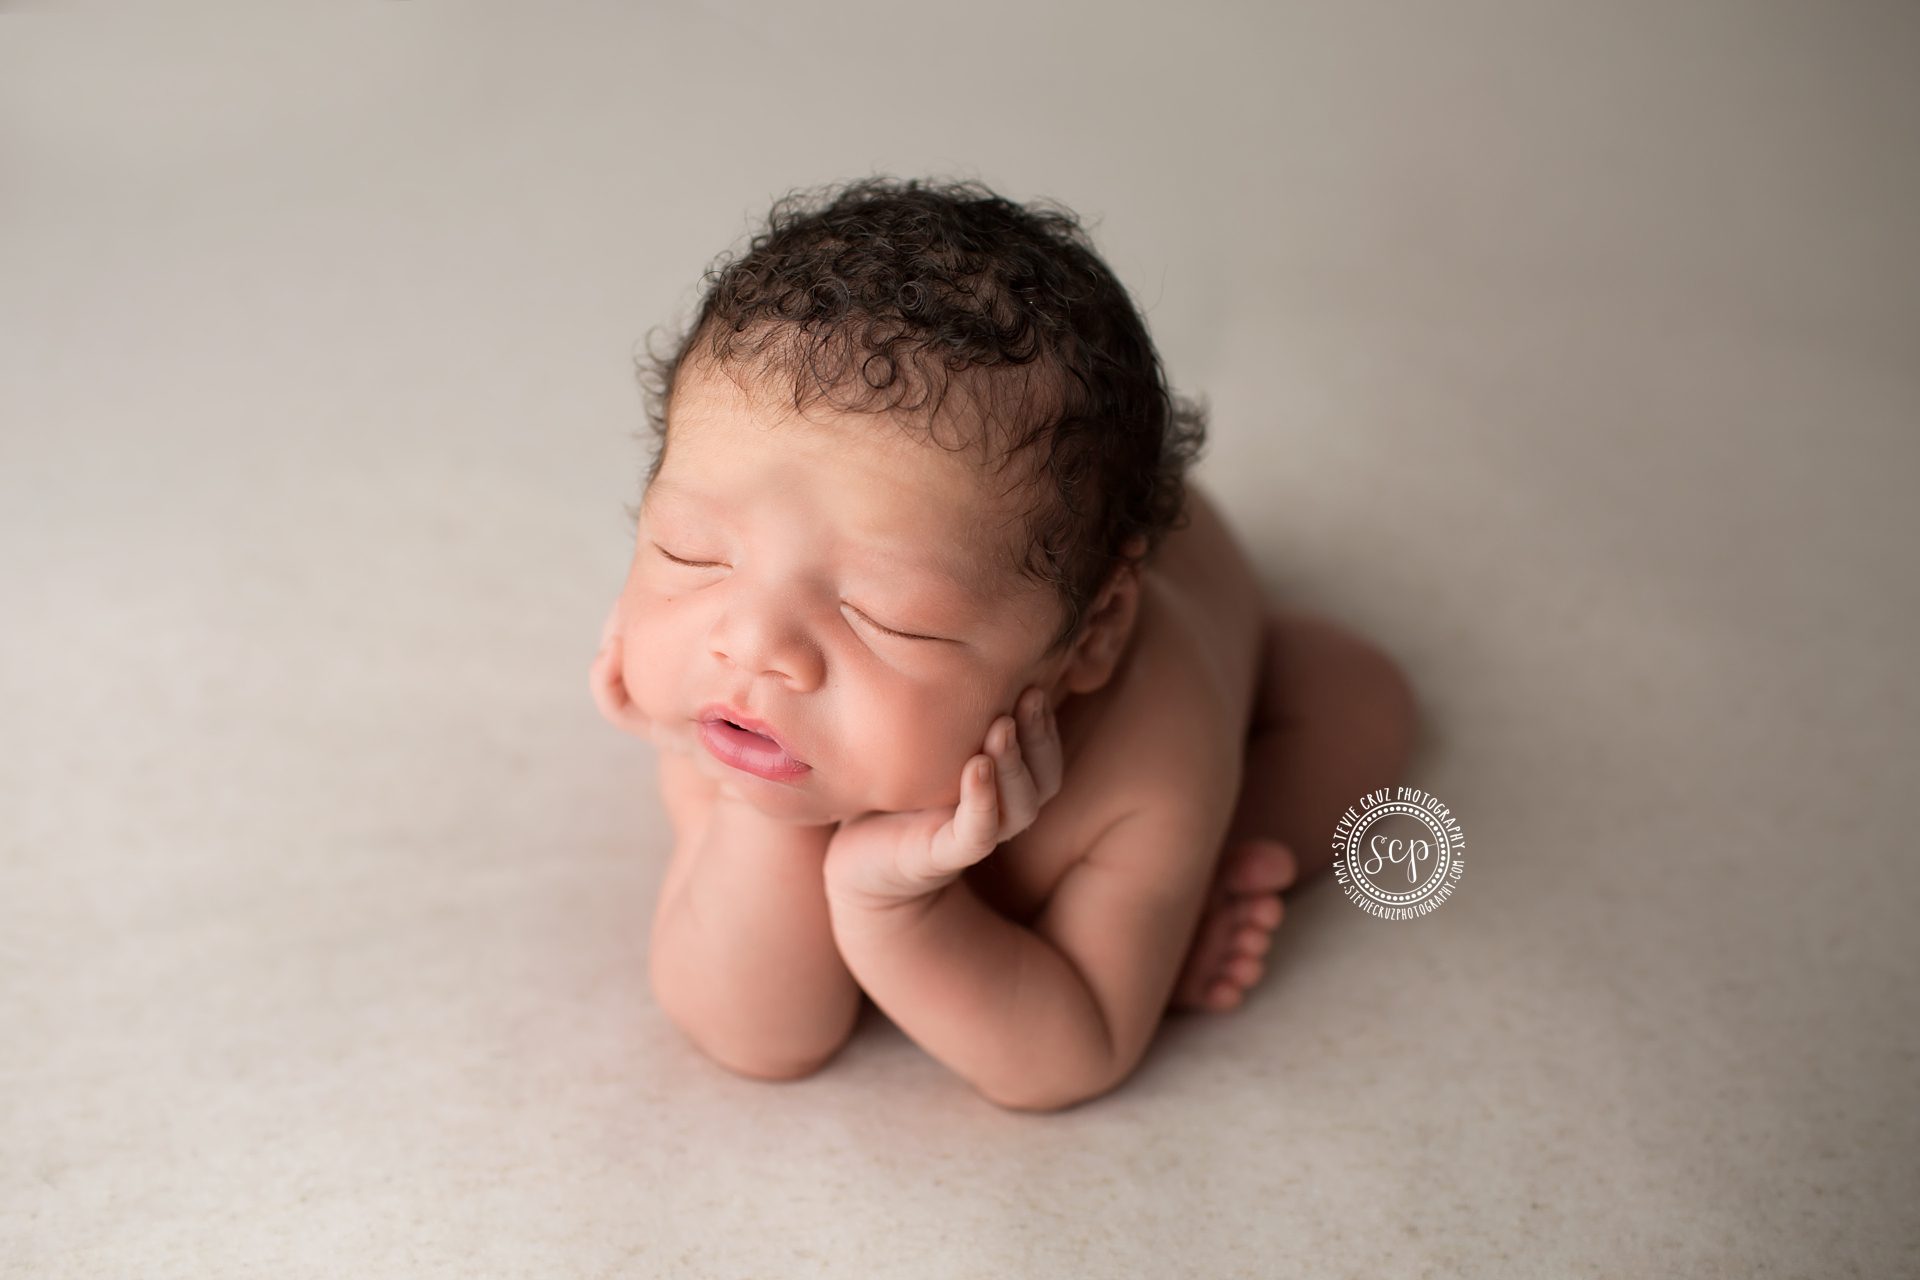 newborn photo shoot ideas and inspiration